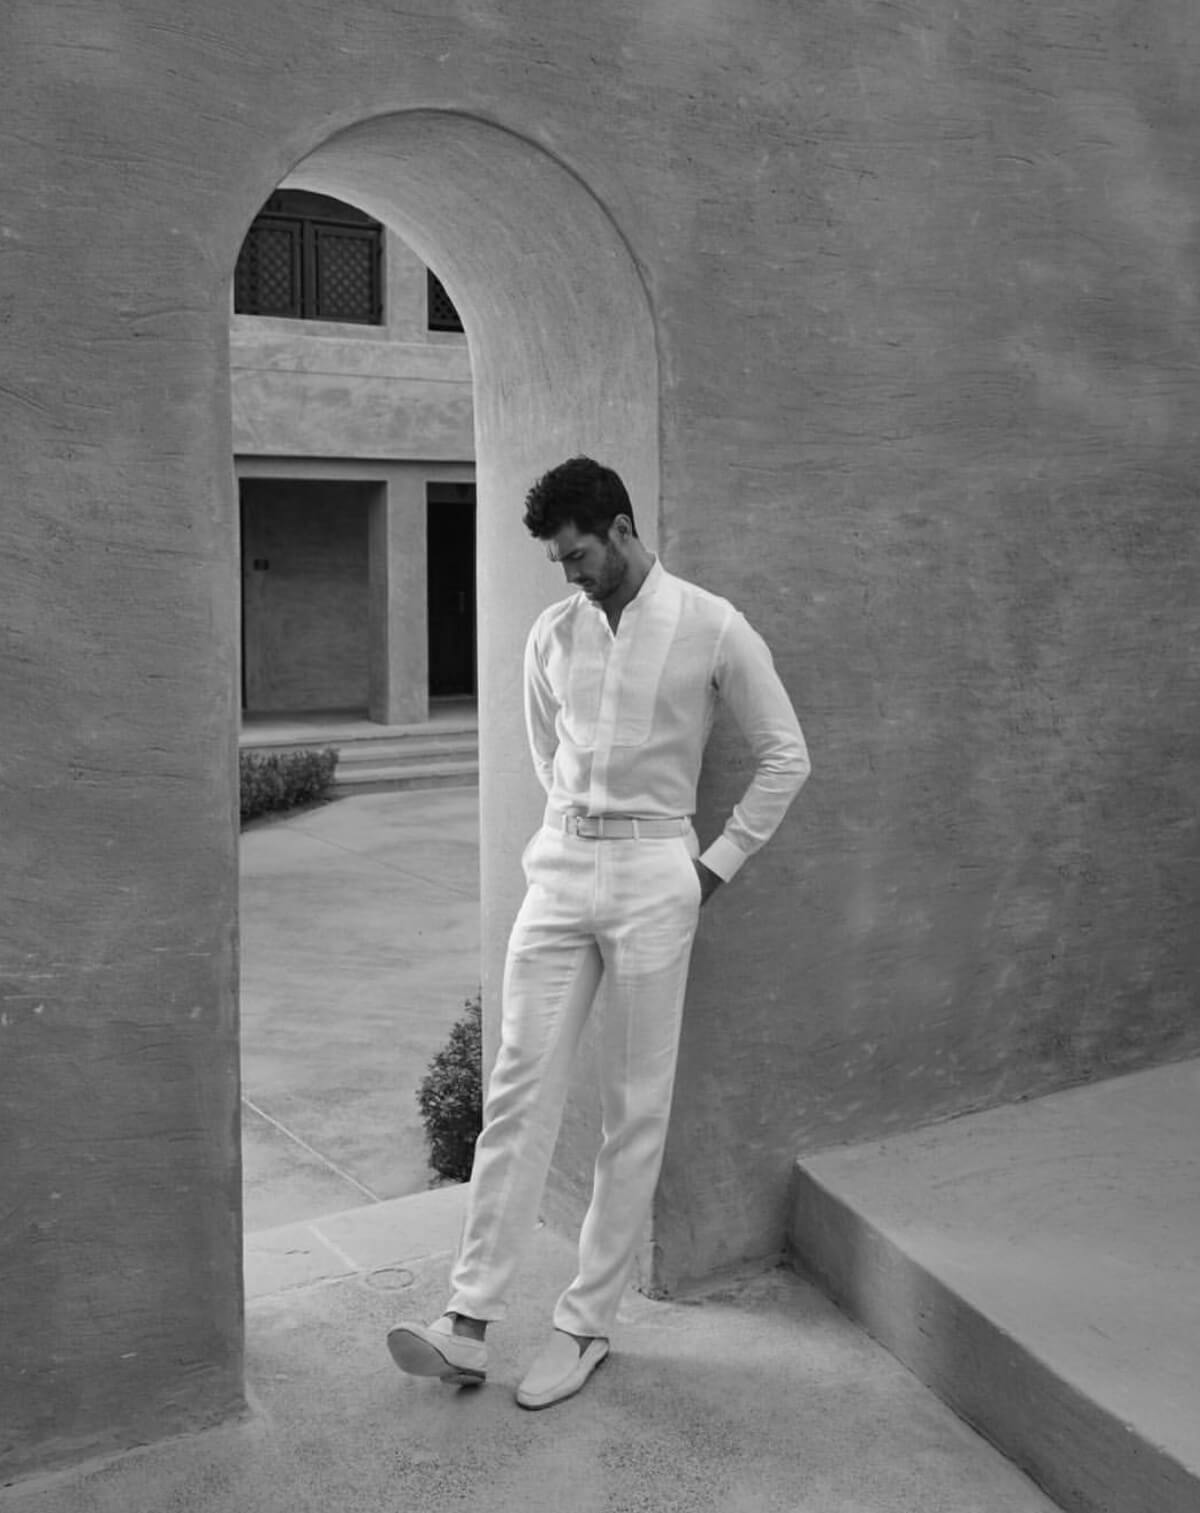 Pantalone Positano 100% Capri linen trouser worn by model